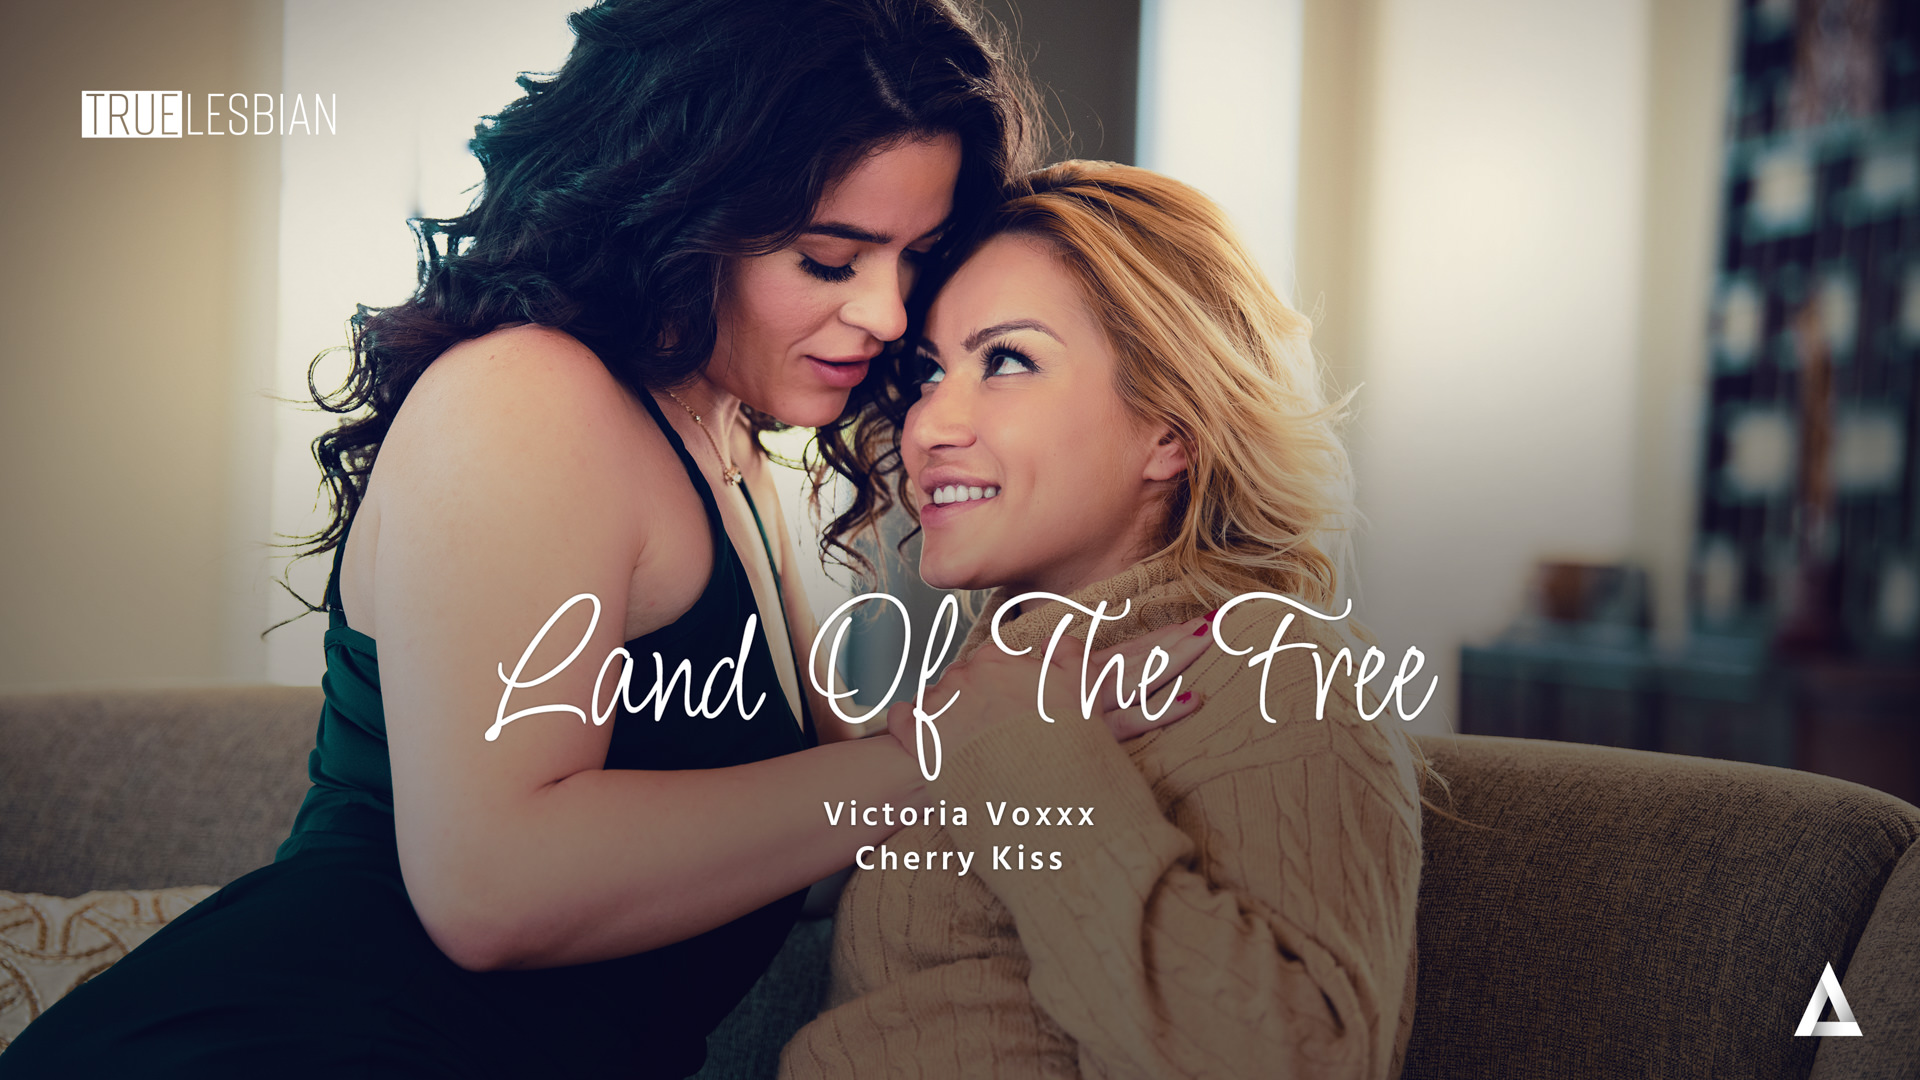 True Lesbian Victoria Voxxx, Cherry Kiss Land Of The Free